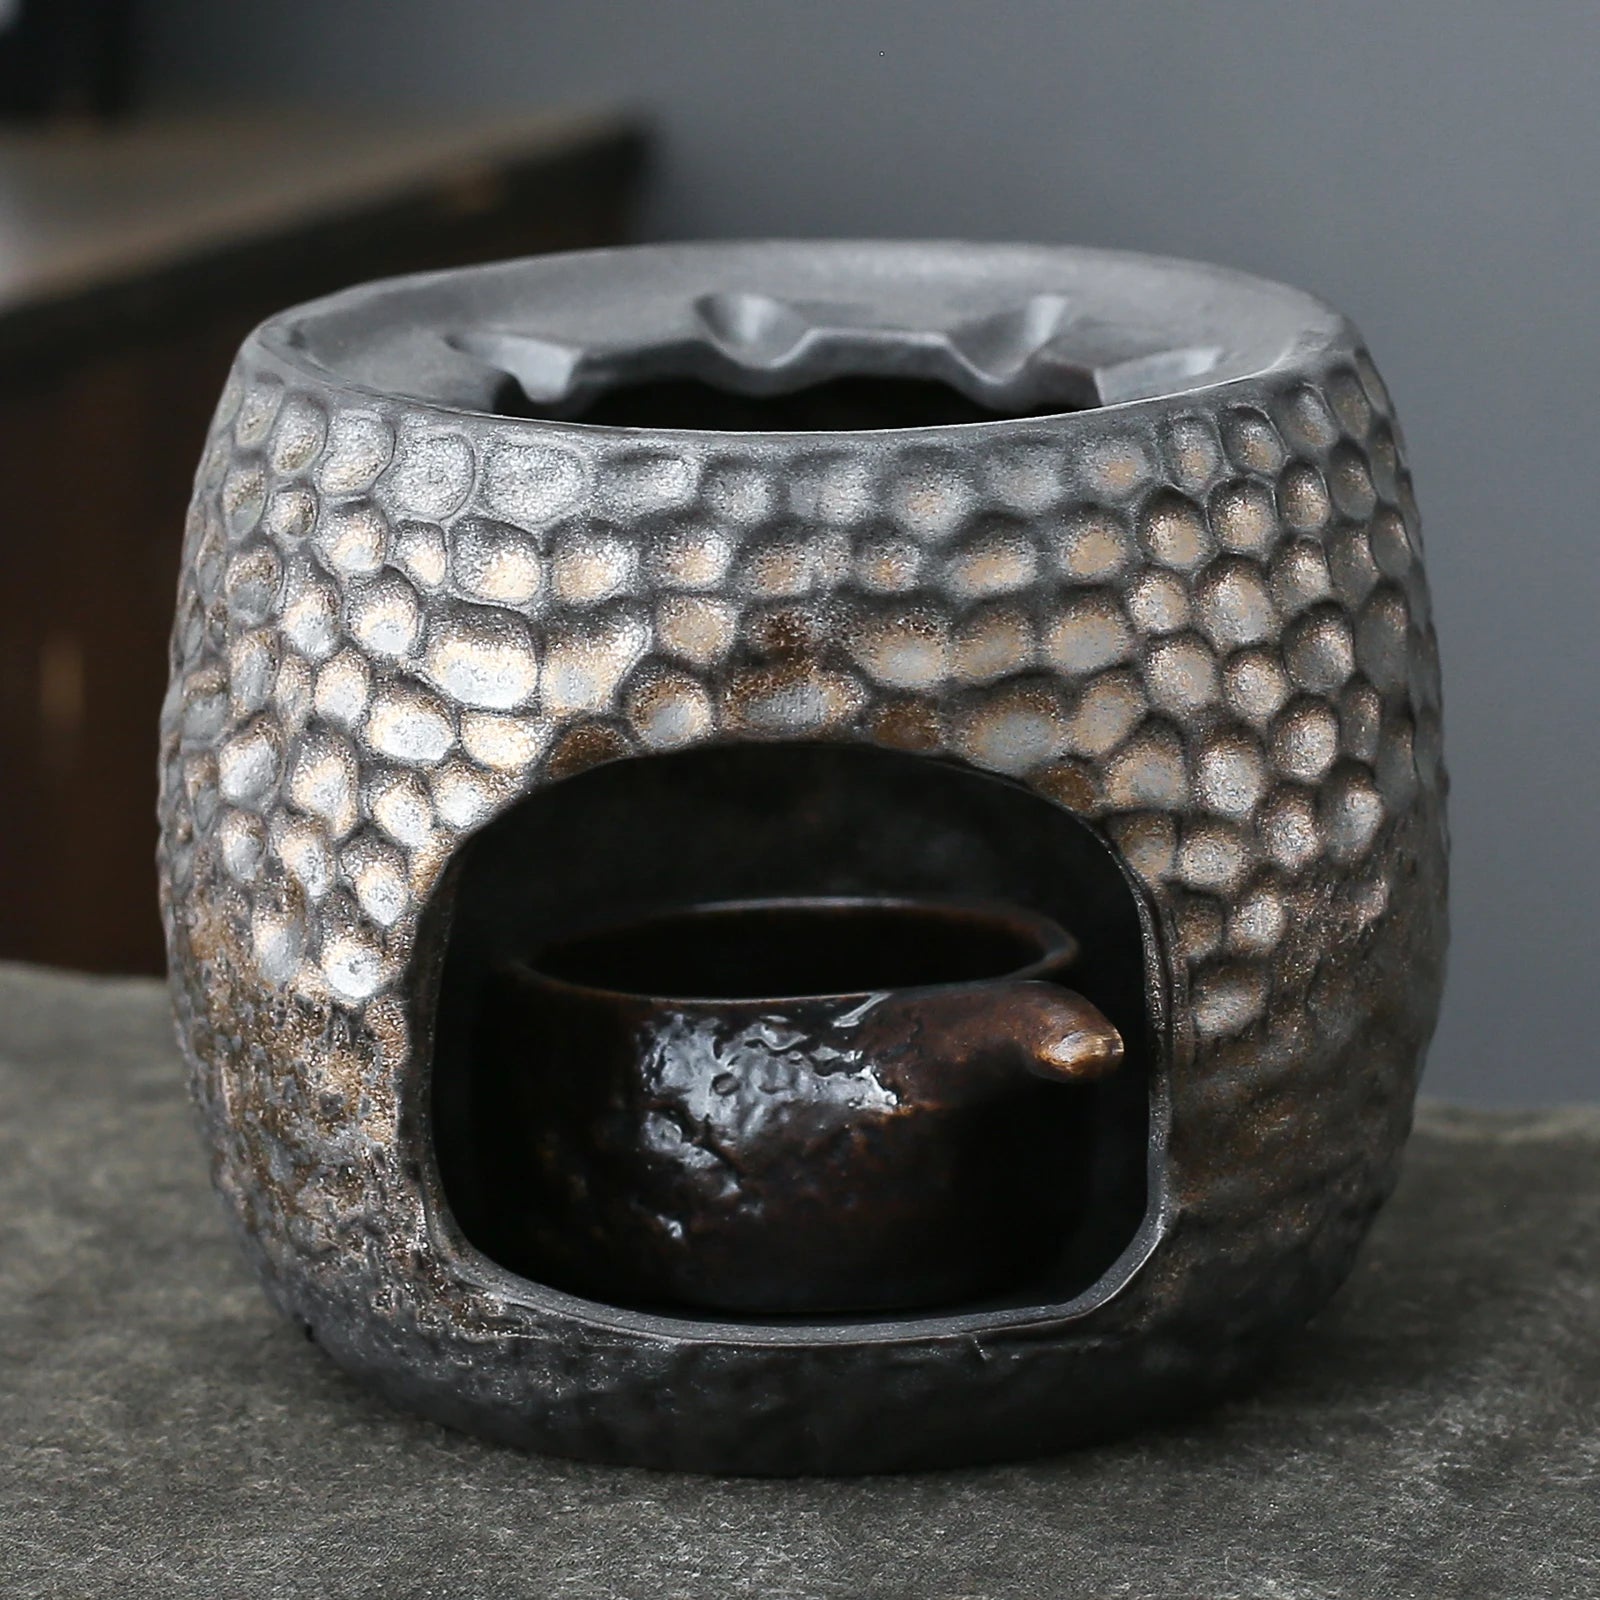 Handmade Japanese Ceramic Gilt Iron Glazed Teapot Warmer